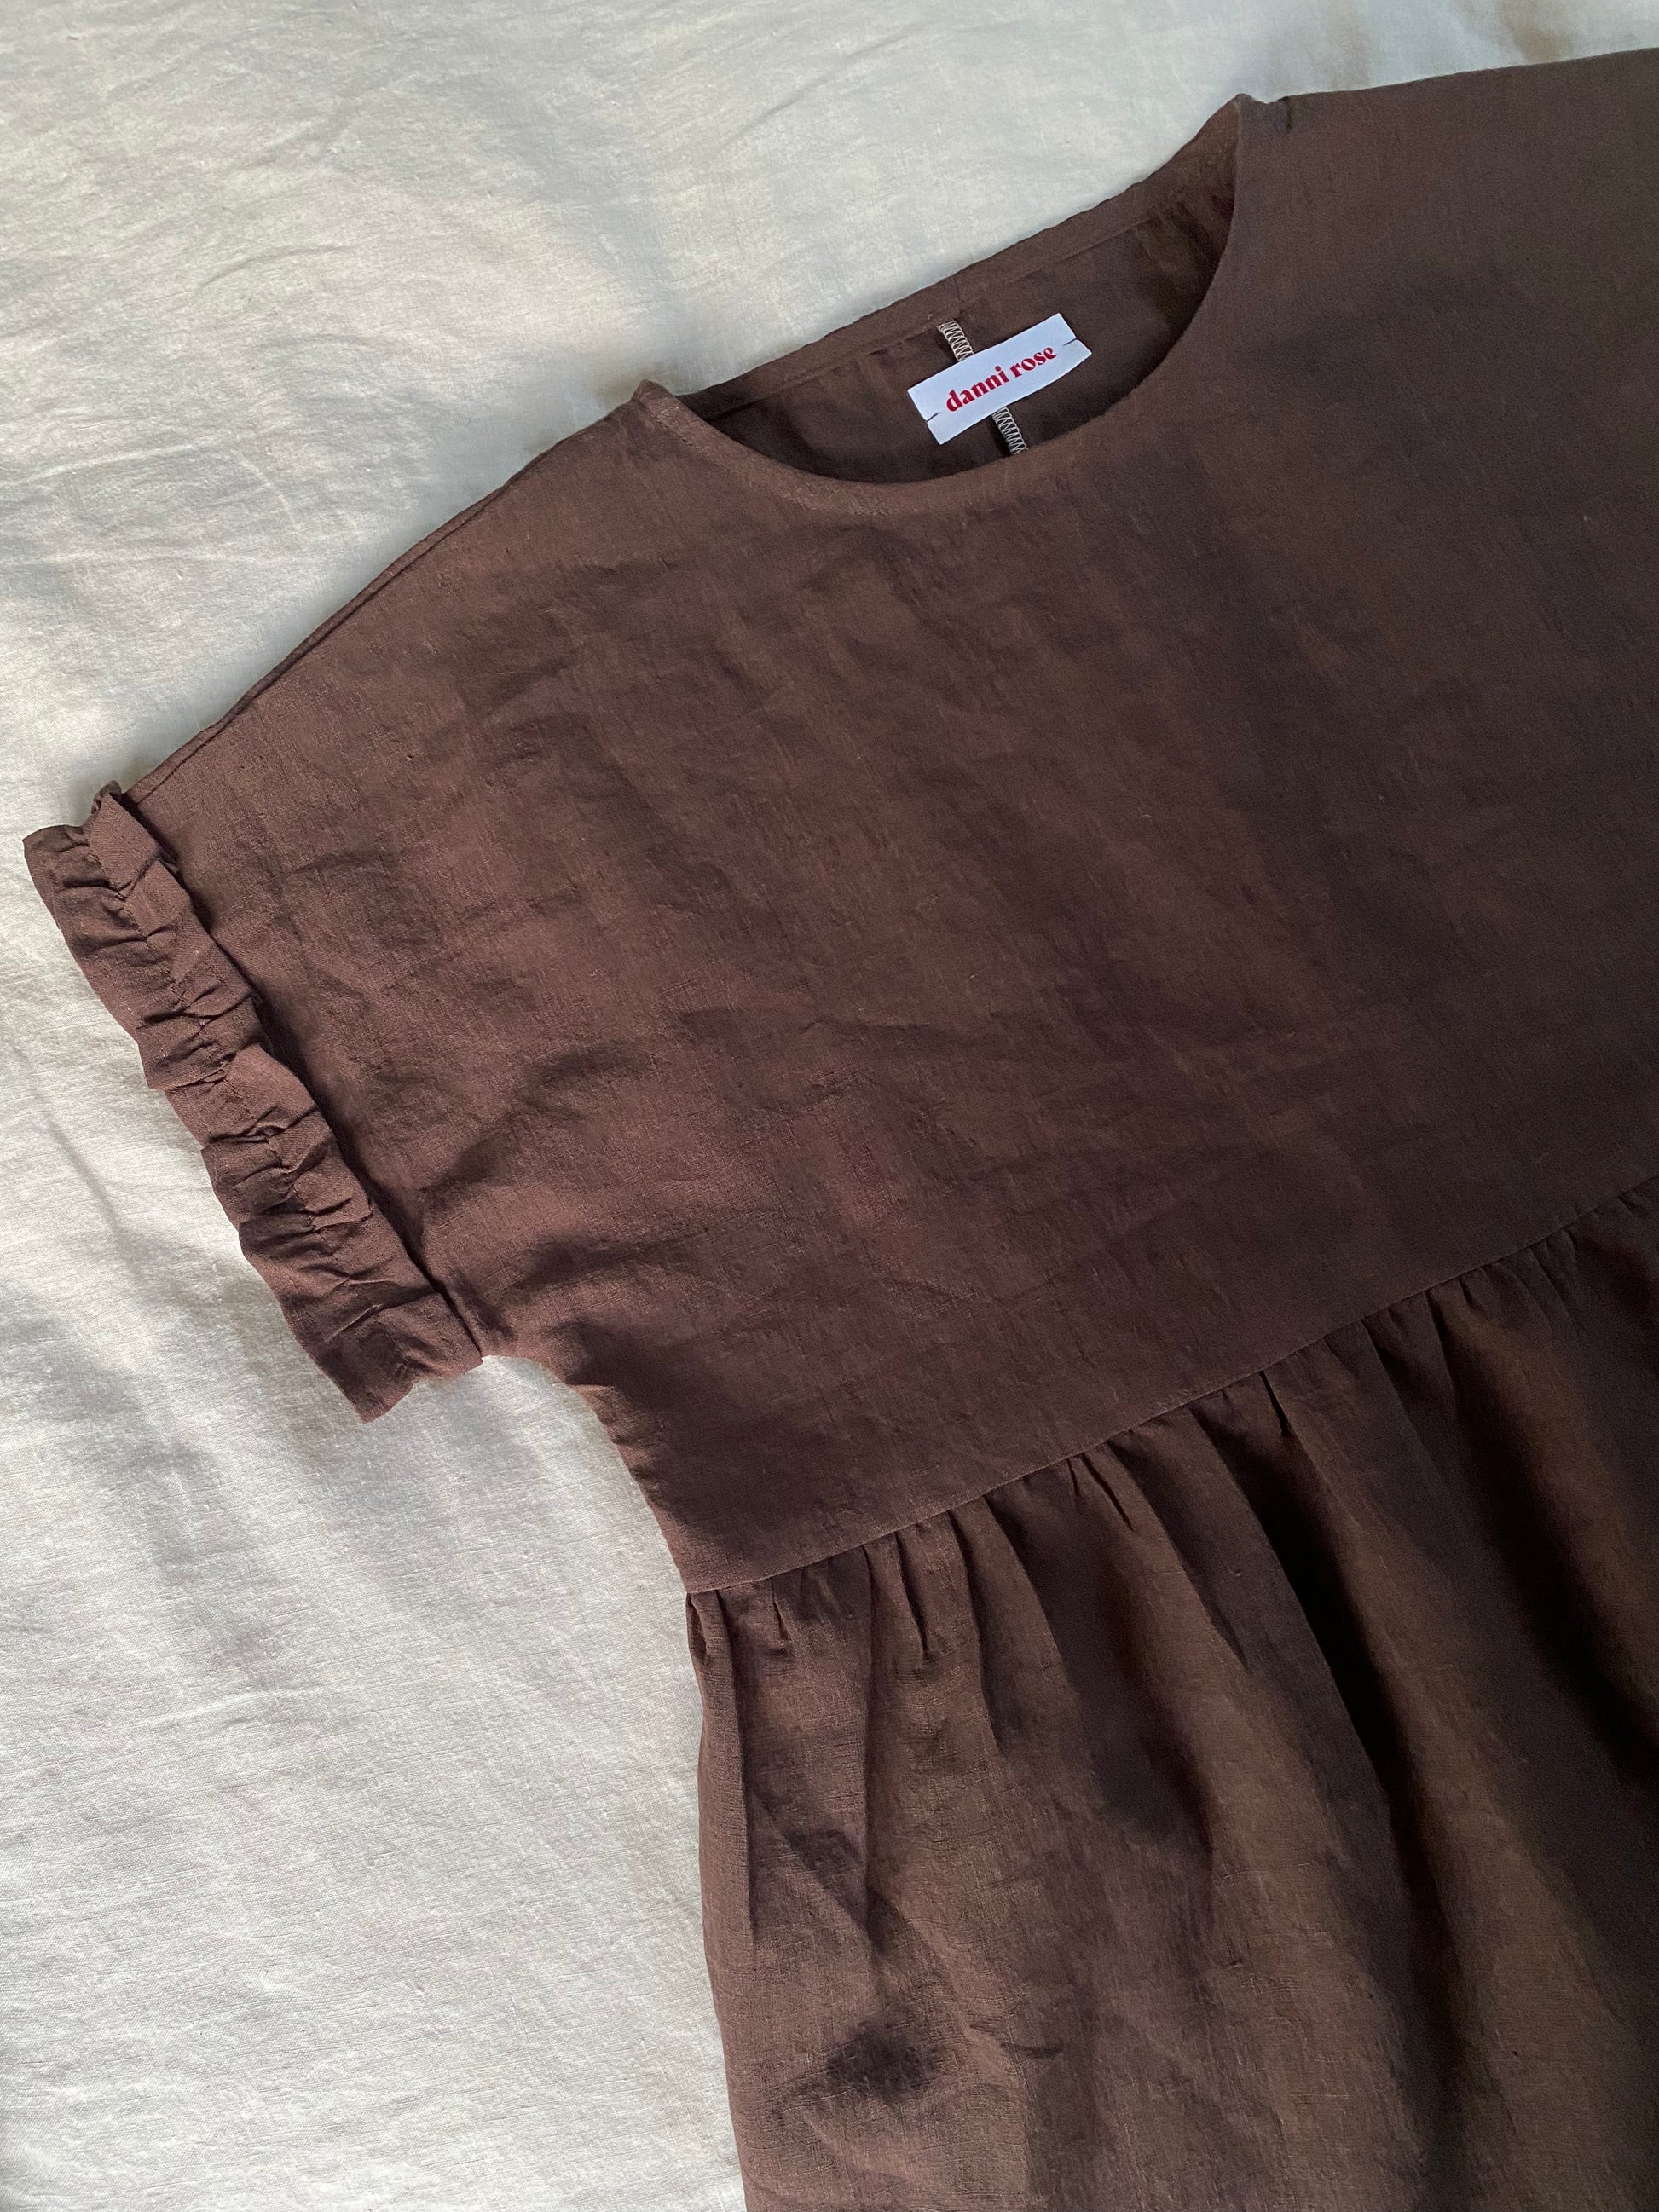 Brunch Dress Sewing Pattern – Danni Rose Designs